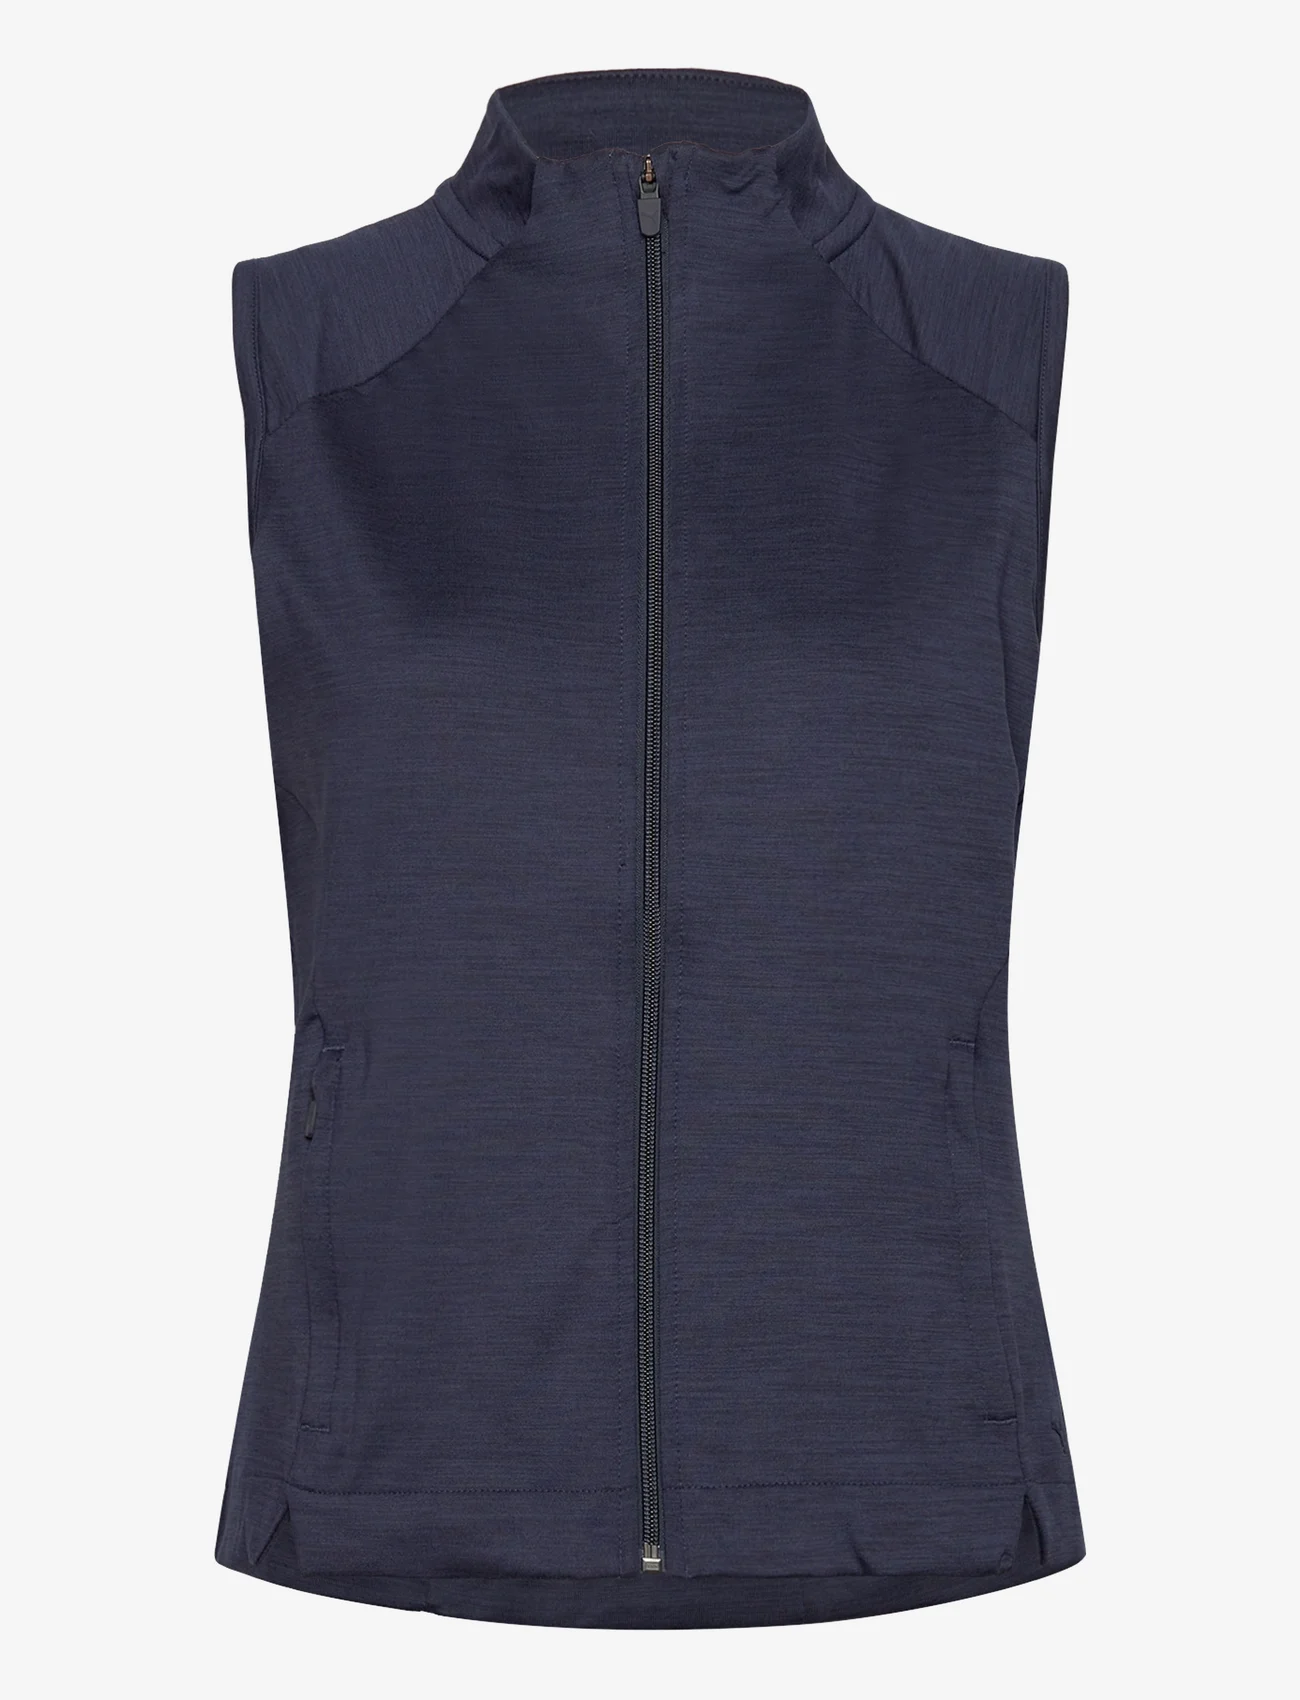 PUMA Golf - W Cloudspun Heather Full Zip Vest - quilted vests - navy blazer heather - 0